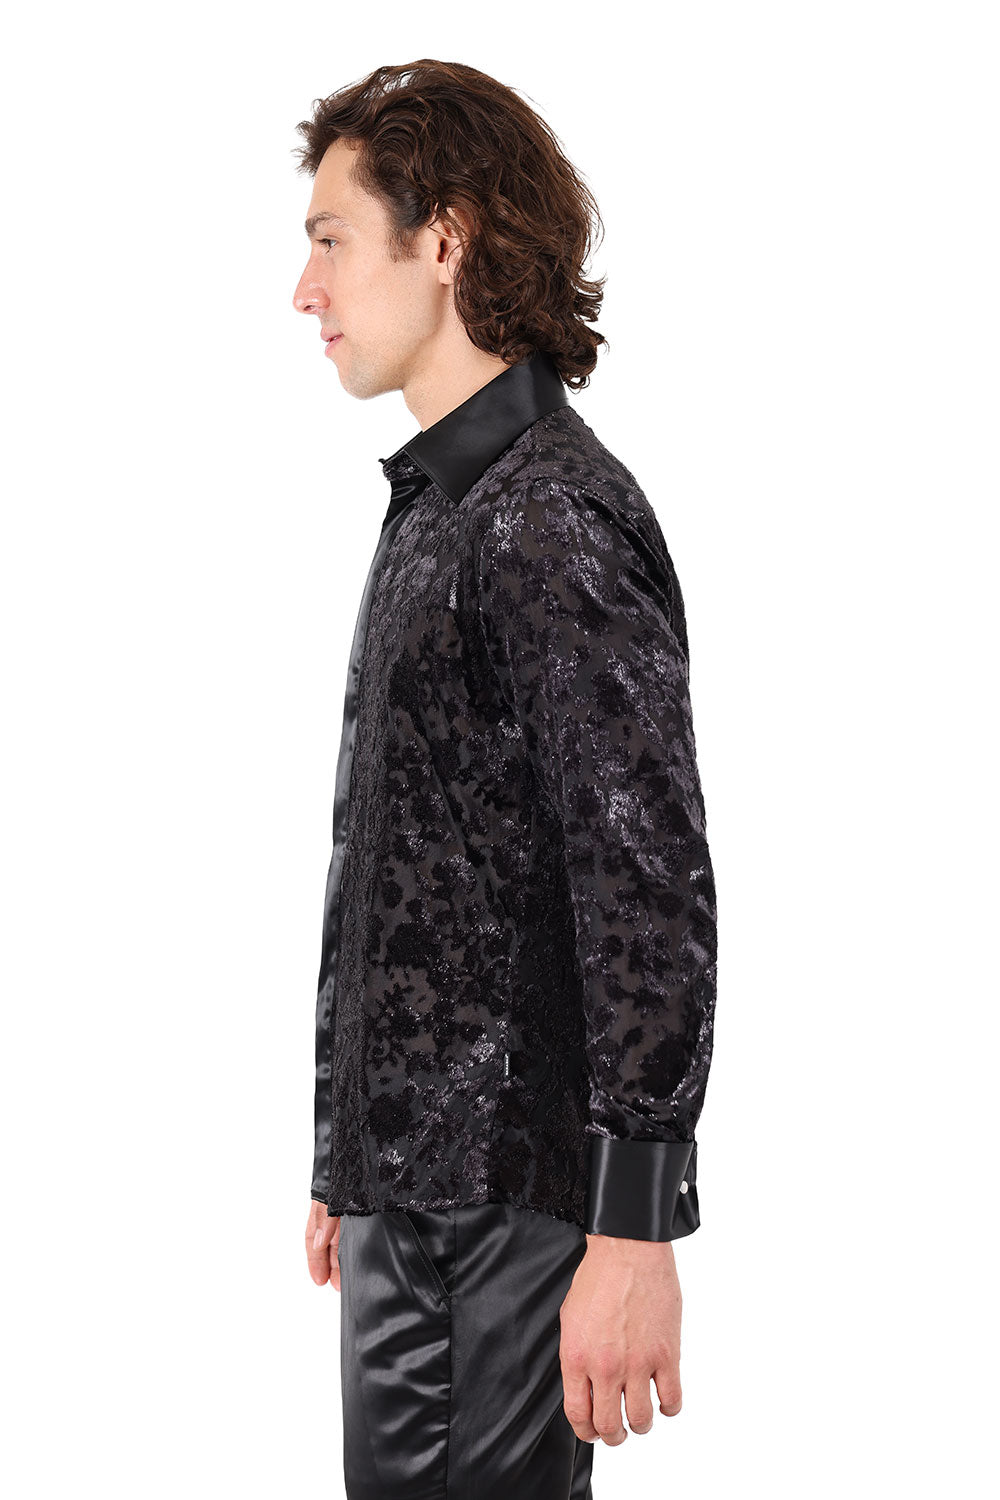 Barabas Men's Luxury French Cuff Long Sleeve Button Down Shirt FCS1003 Black